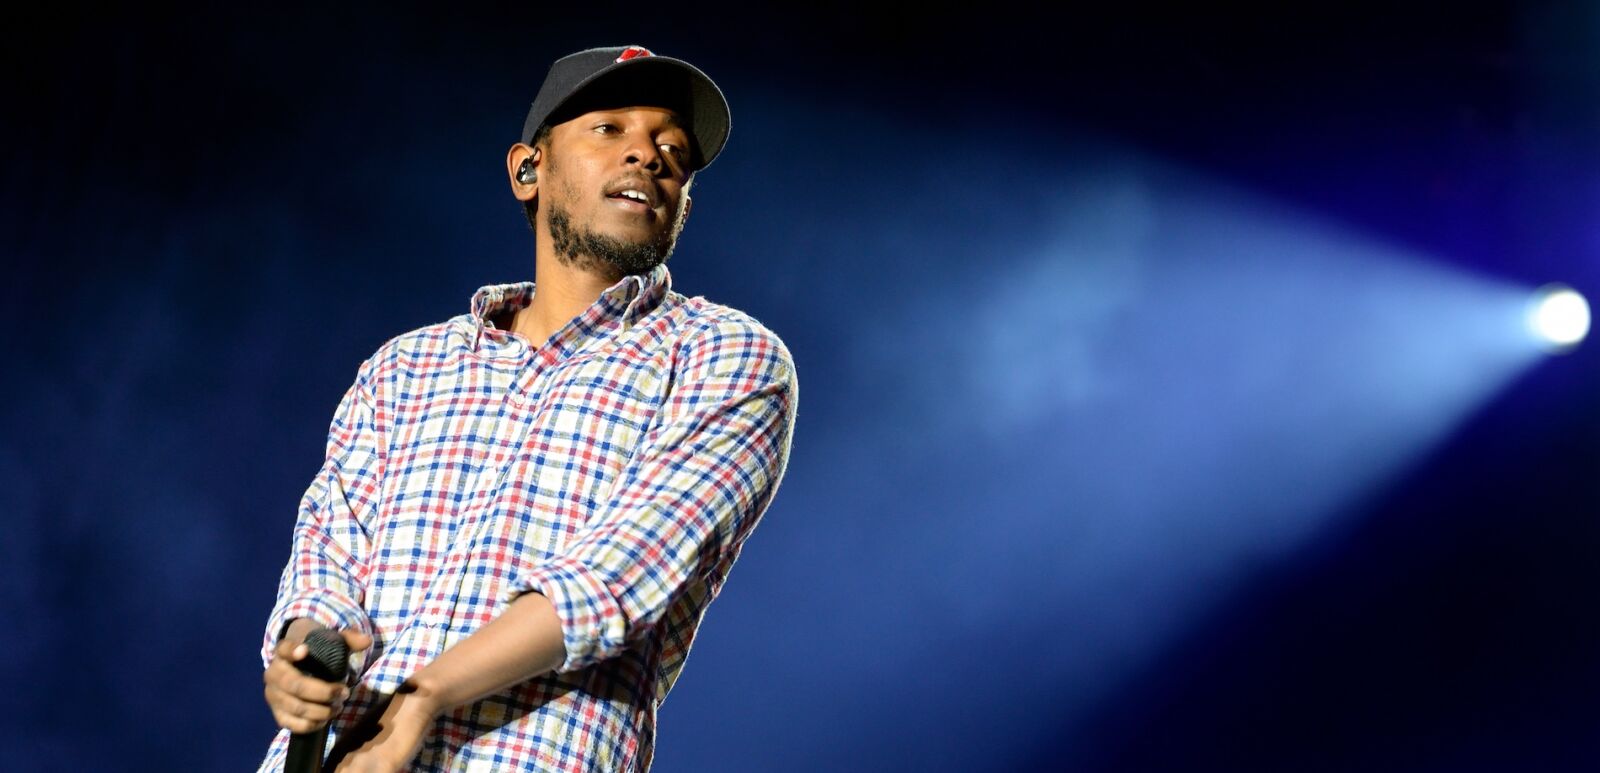 Kendrick Lamar (American hip hop recording artist) performs at Heineken Primavera Sound 2014 Festival (PS14) on May 30, 2014 in Barcelona, Spain.